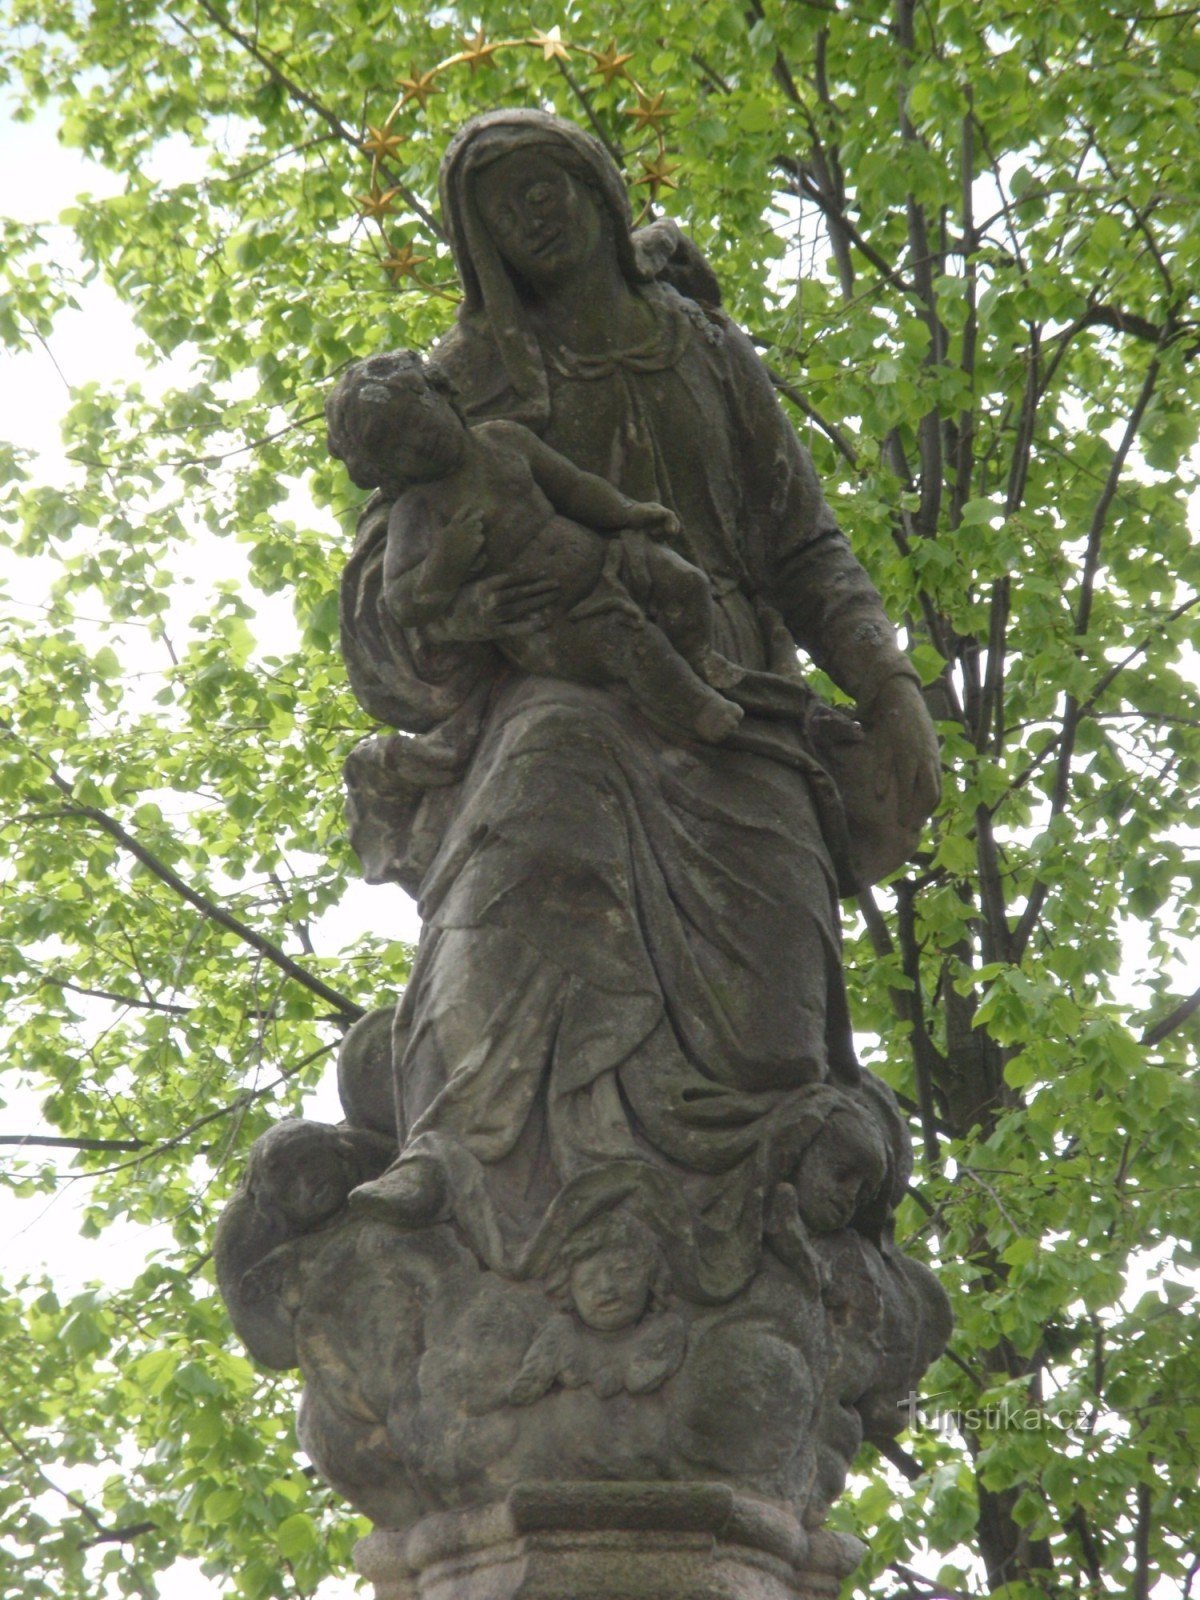 Žďár nad Sázavou - en søjle med en statue af Jomfru Maria